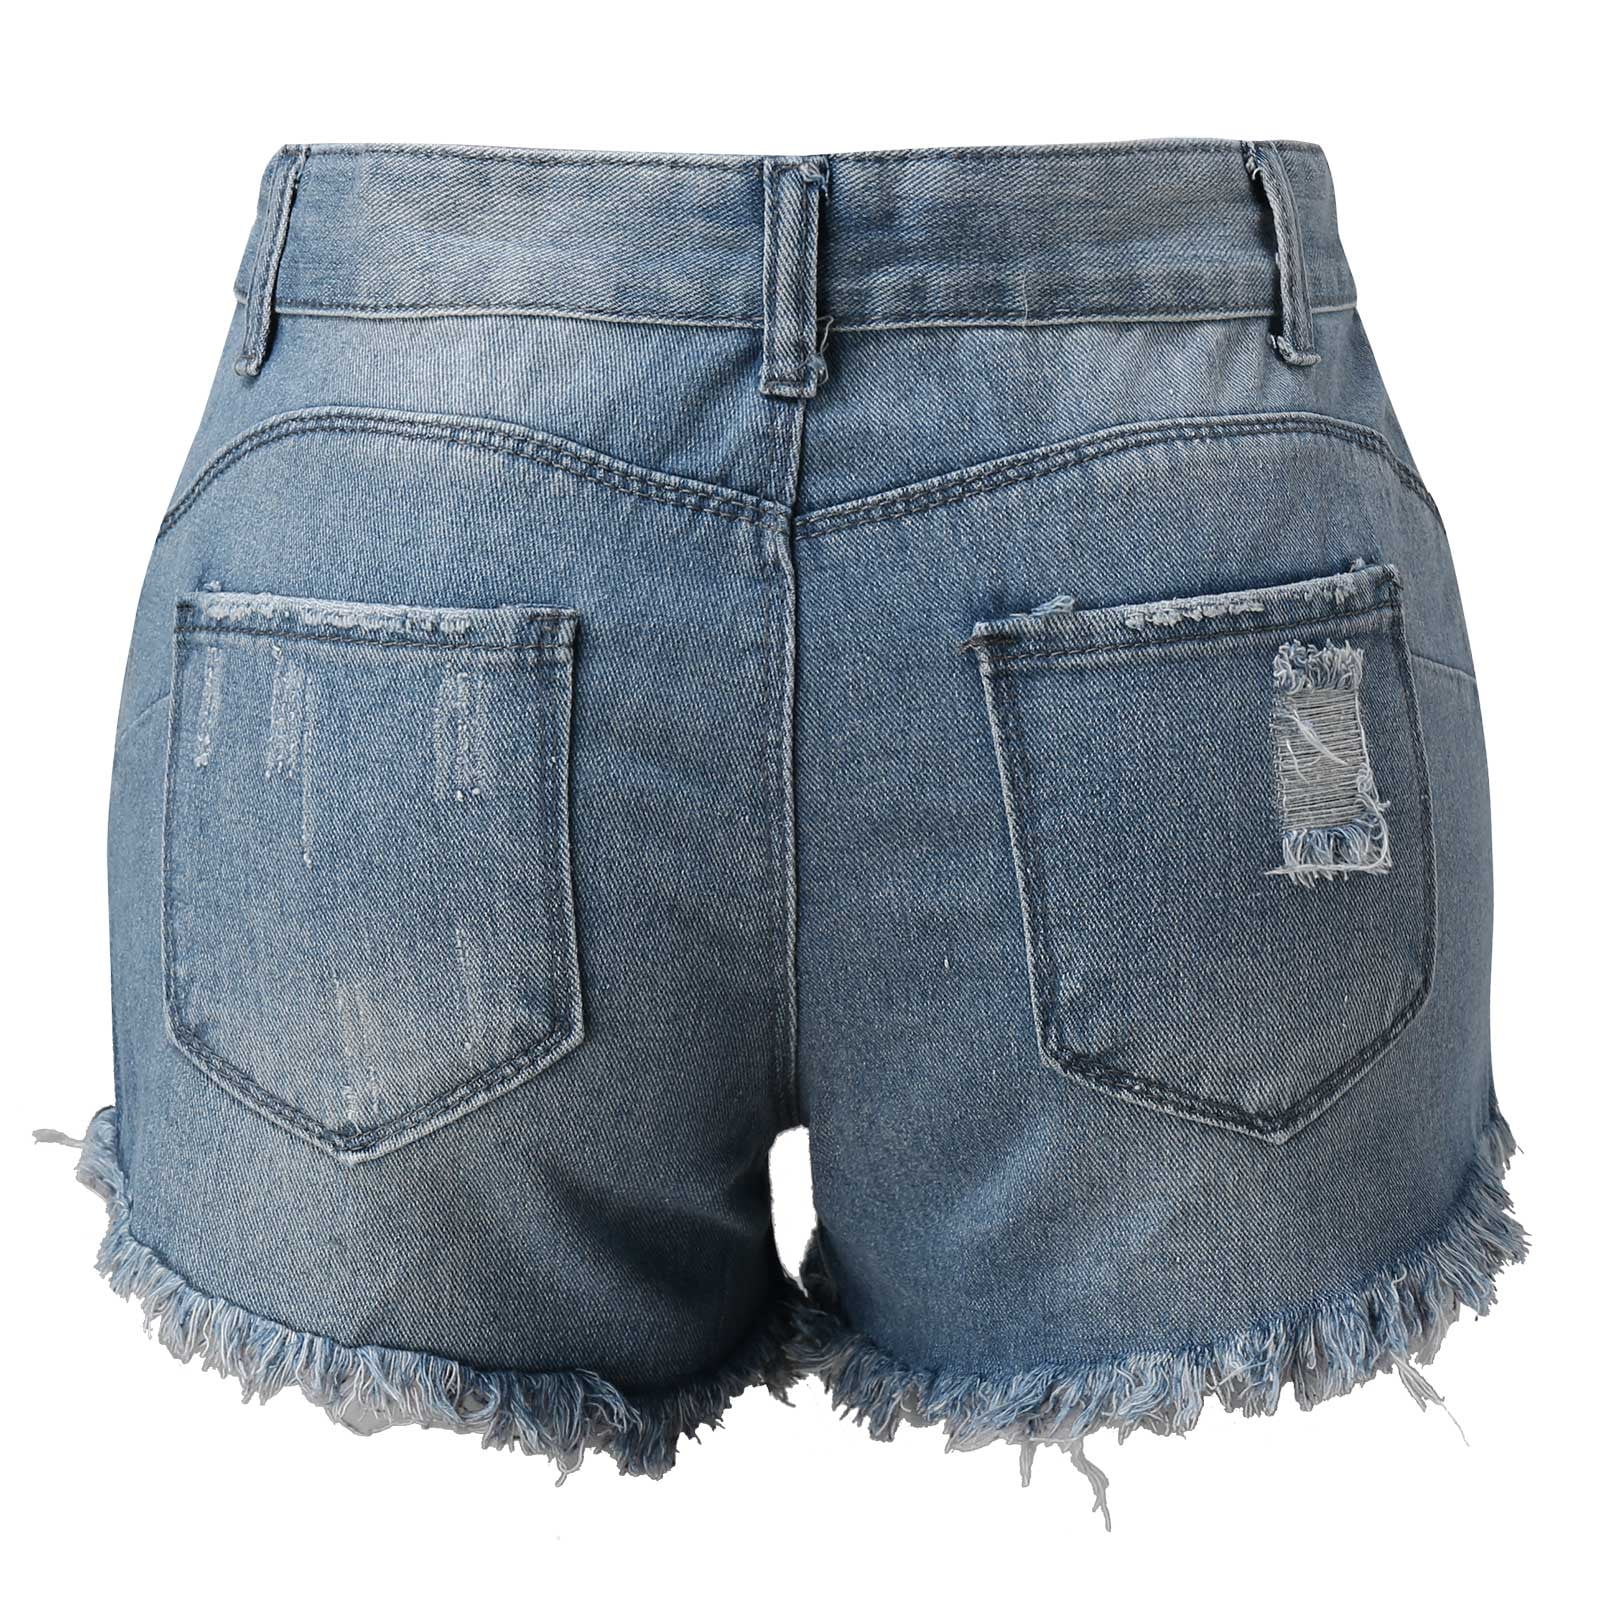 H xoxing Women Shorts Jeans Pocket Denim Hole Solid High Waist Hot High Stretch Slim Skinny Fit Mini Pants Summer 